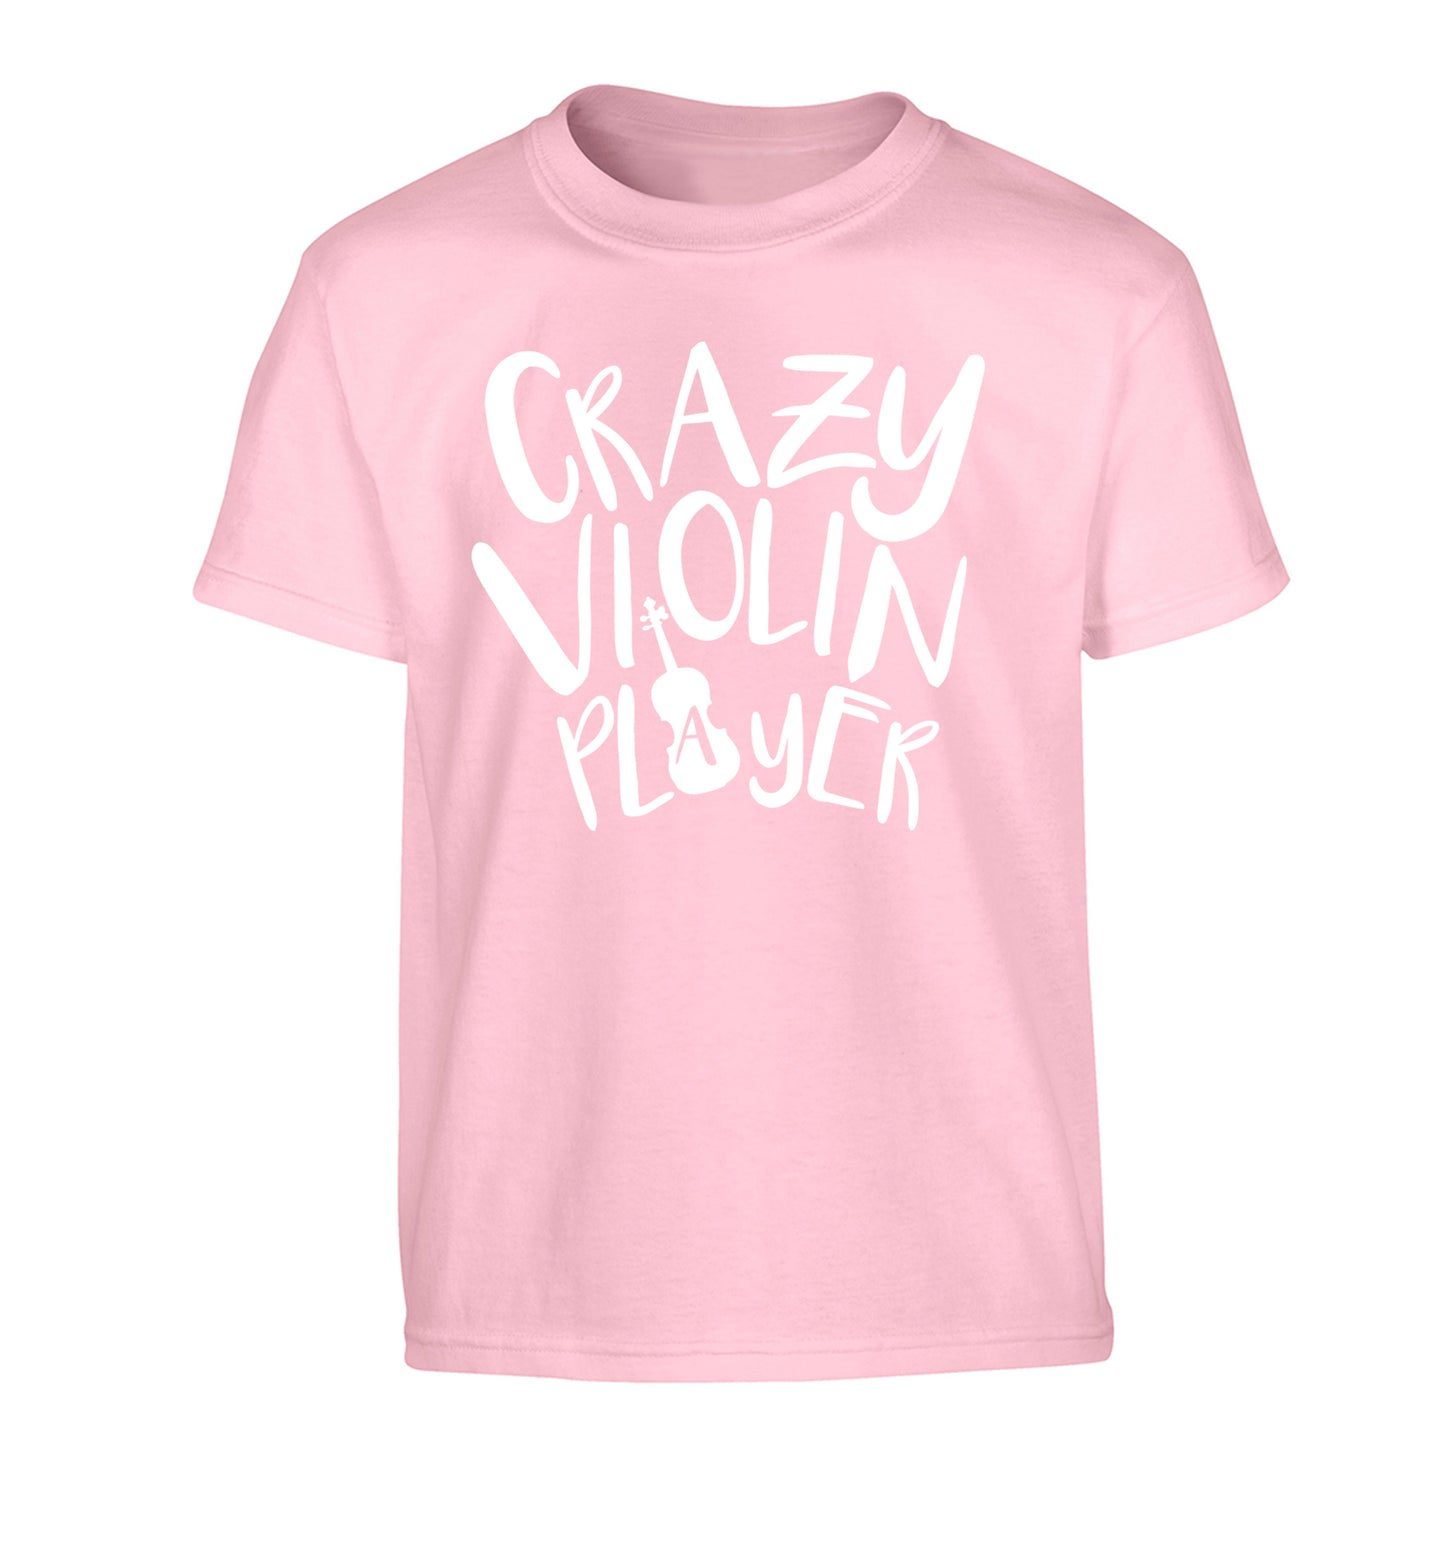 Crazy Violin Player Children's light pink Tshirt 12-13 Years